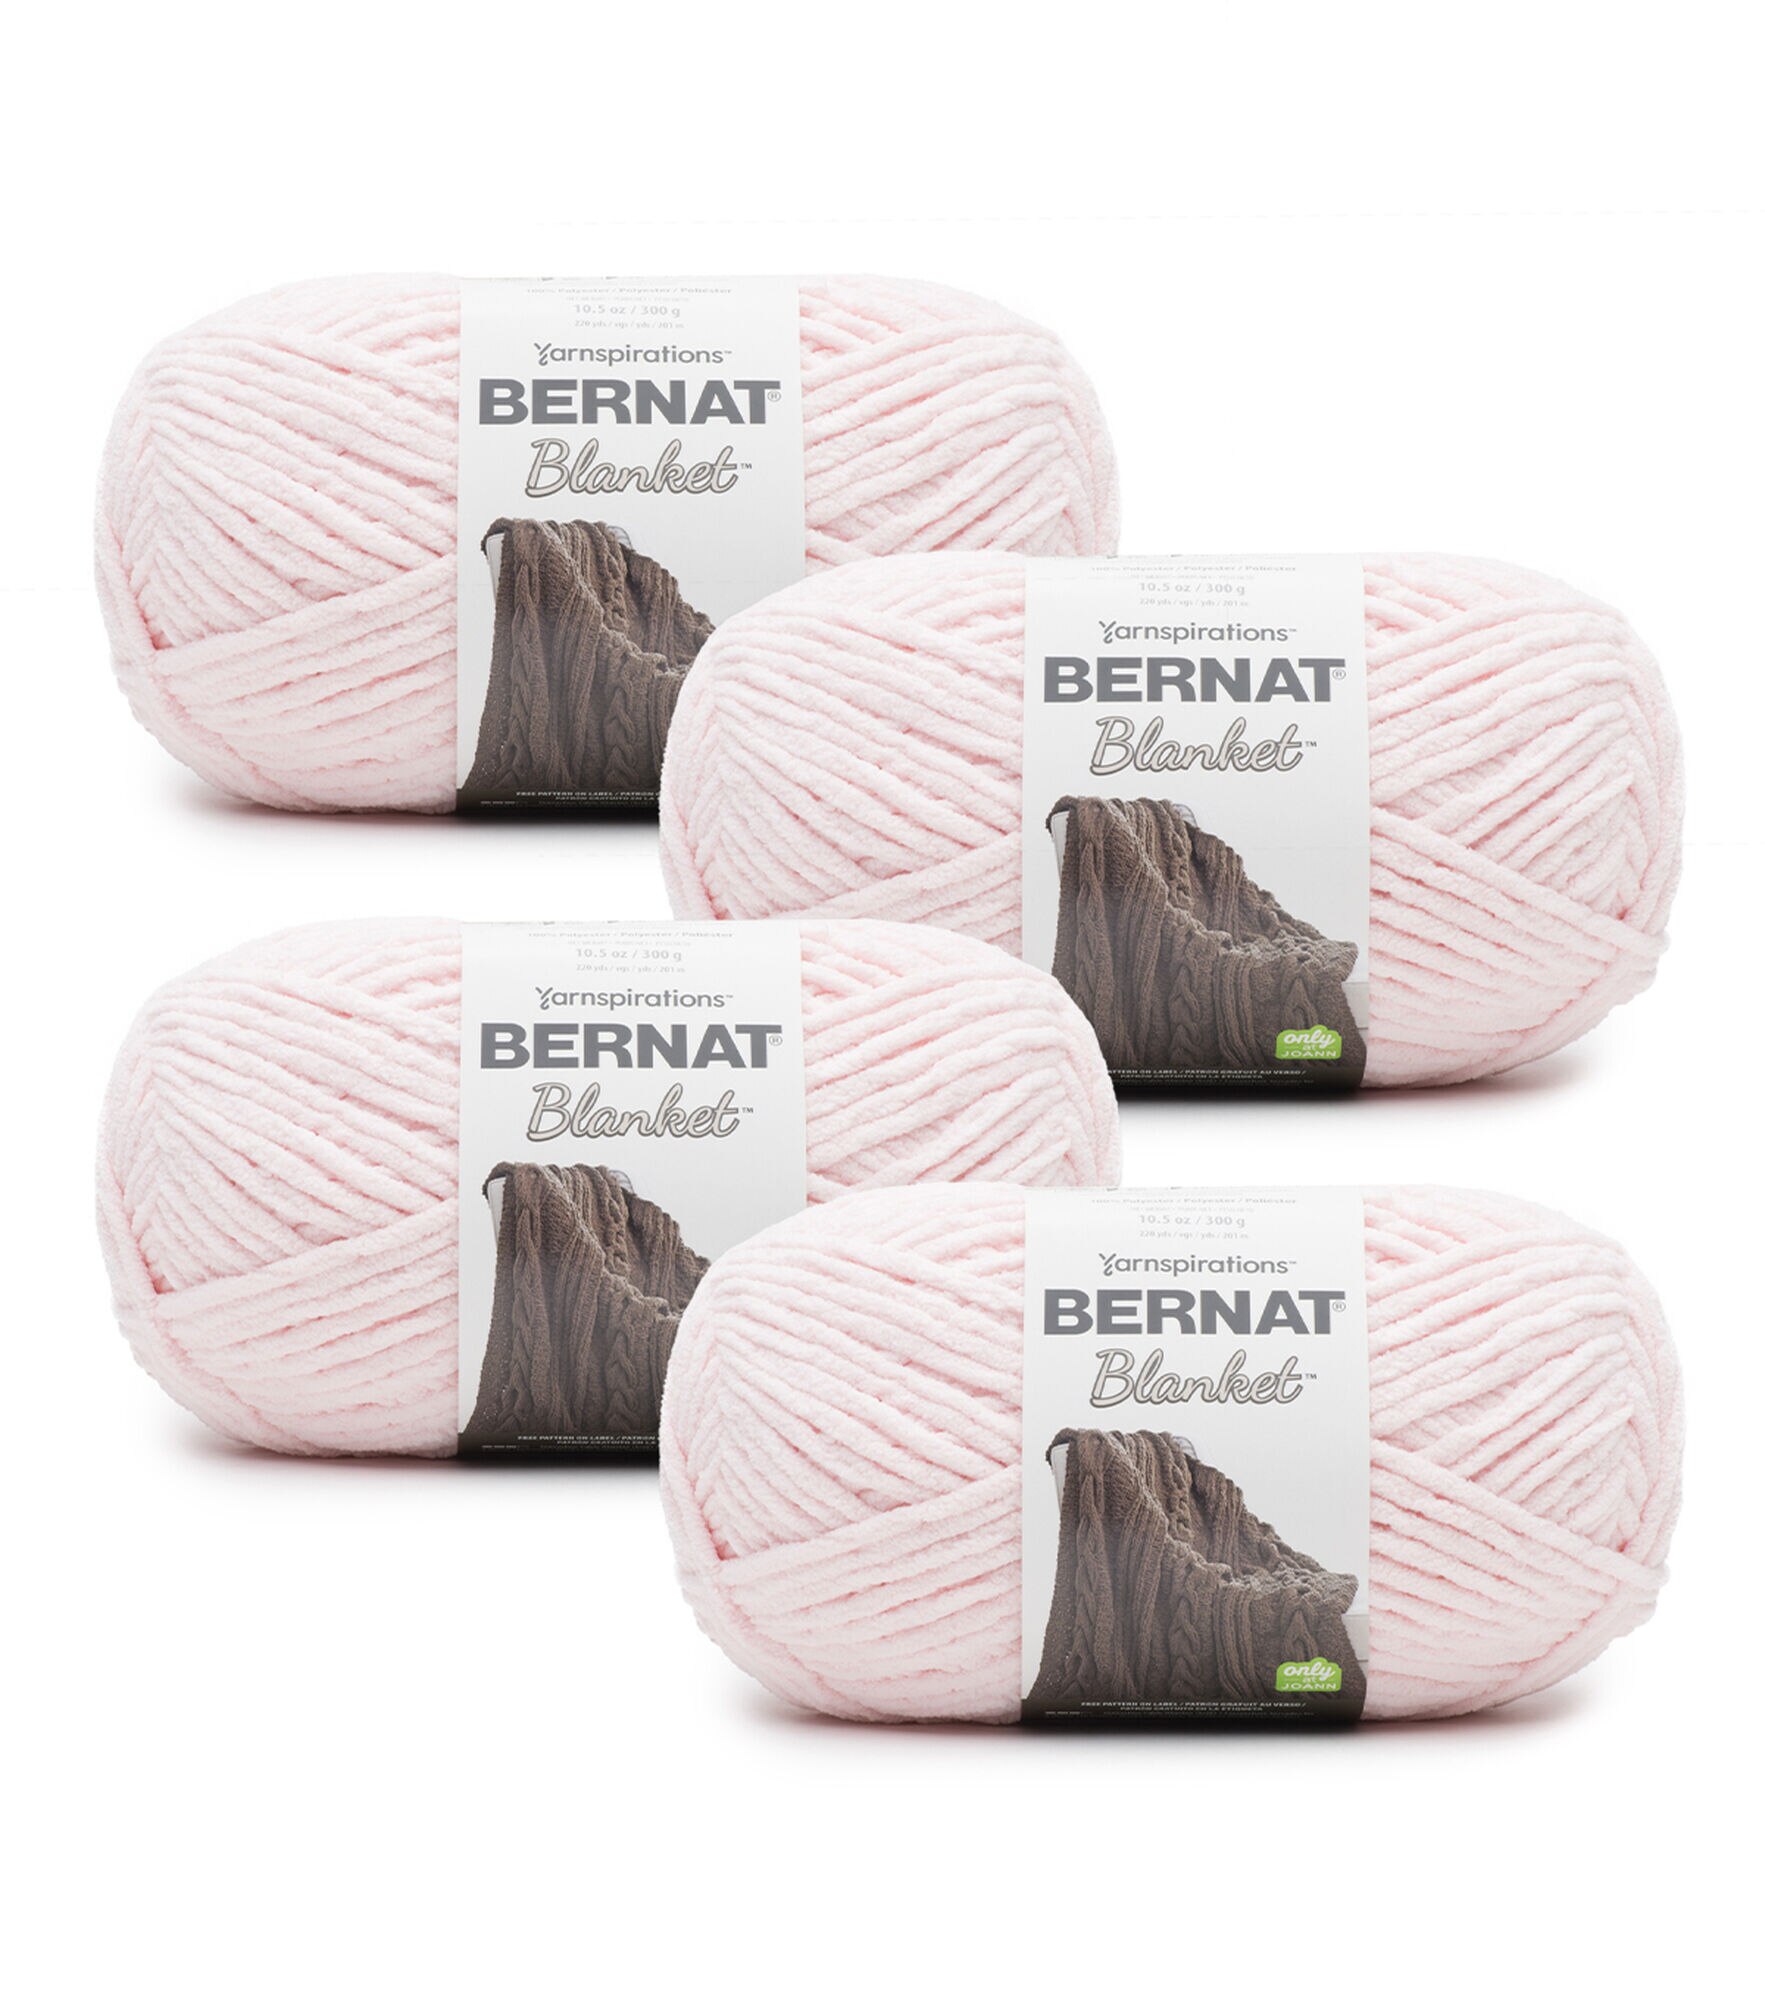 Bernat Blanket Big Ball Yarn-Blush Pink 